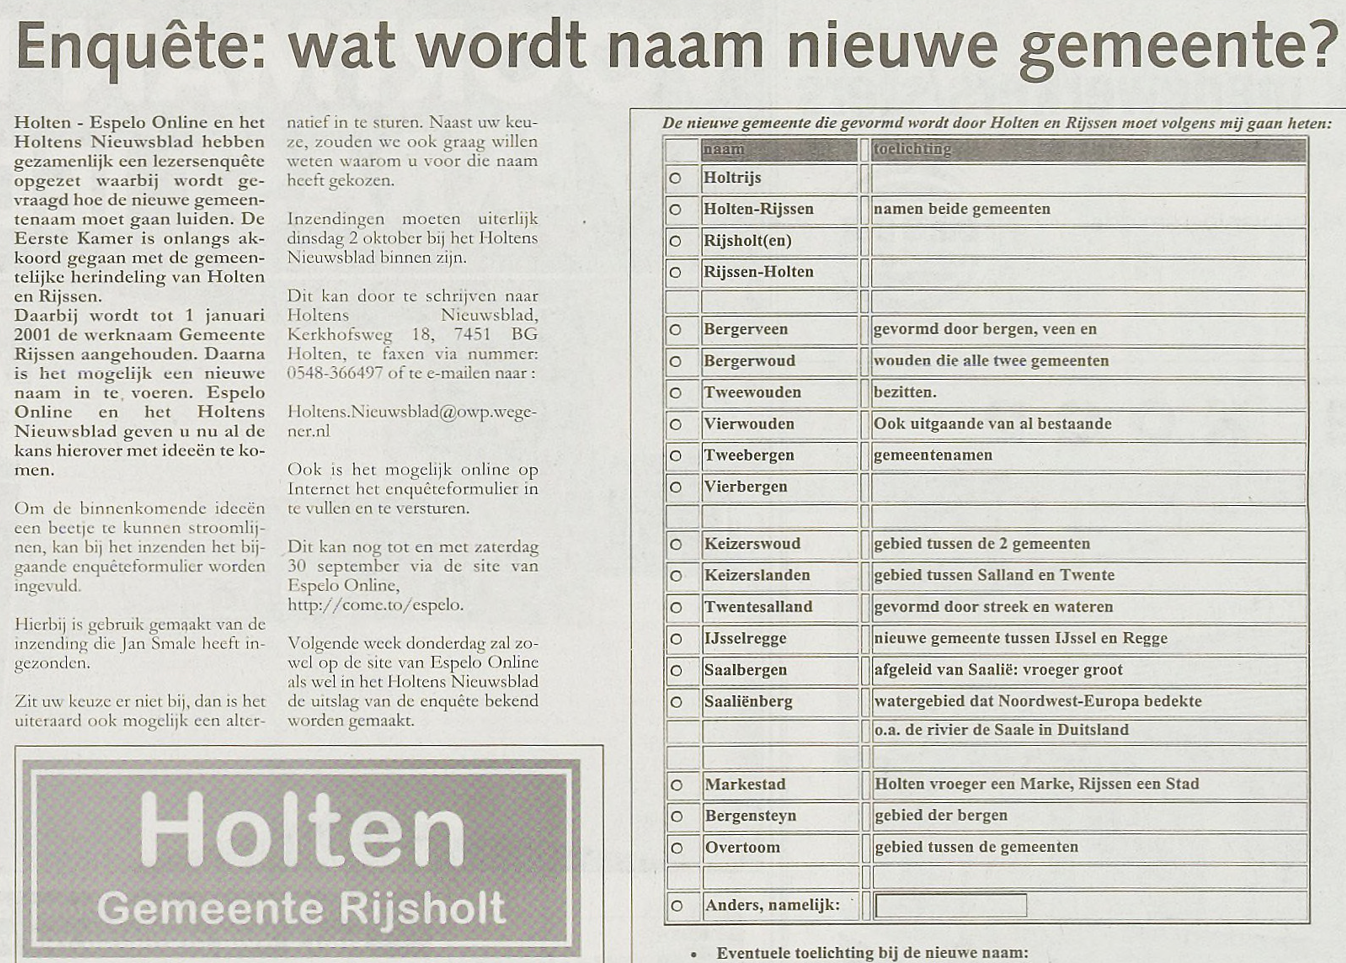 Holtens Nieuwsblad, 28 september 2000